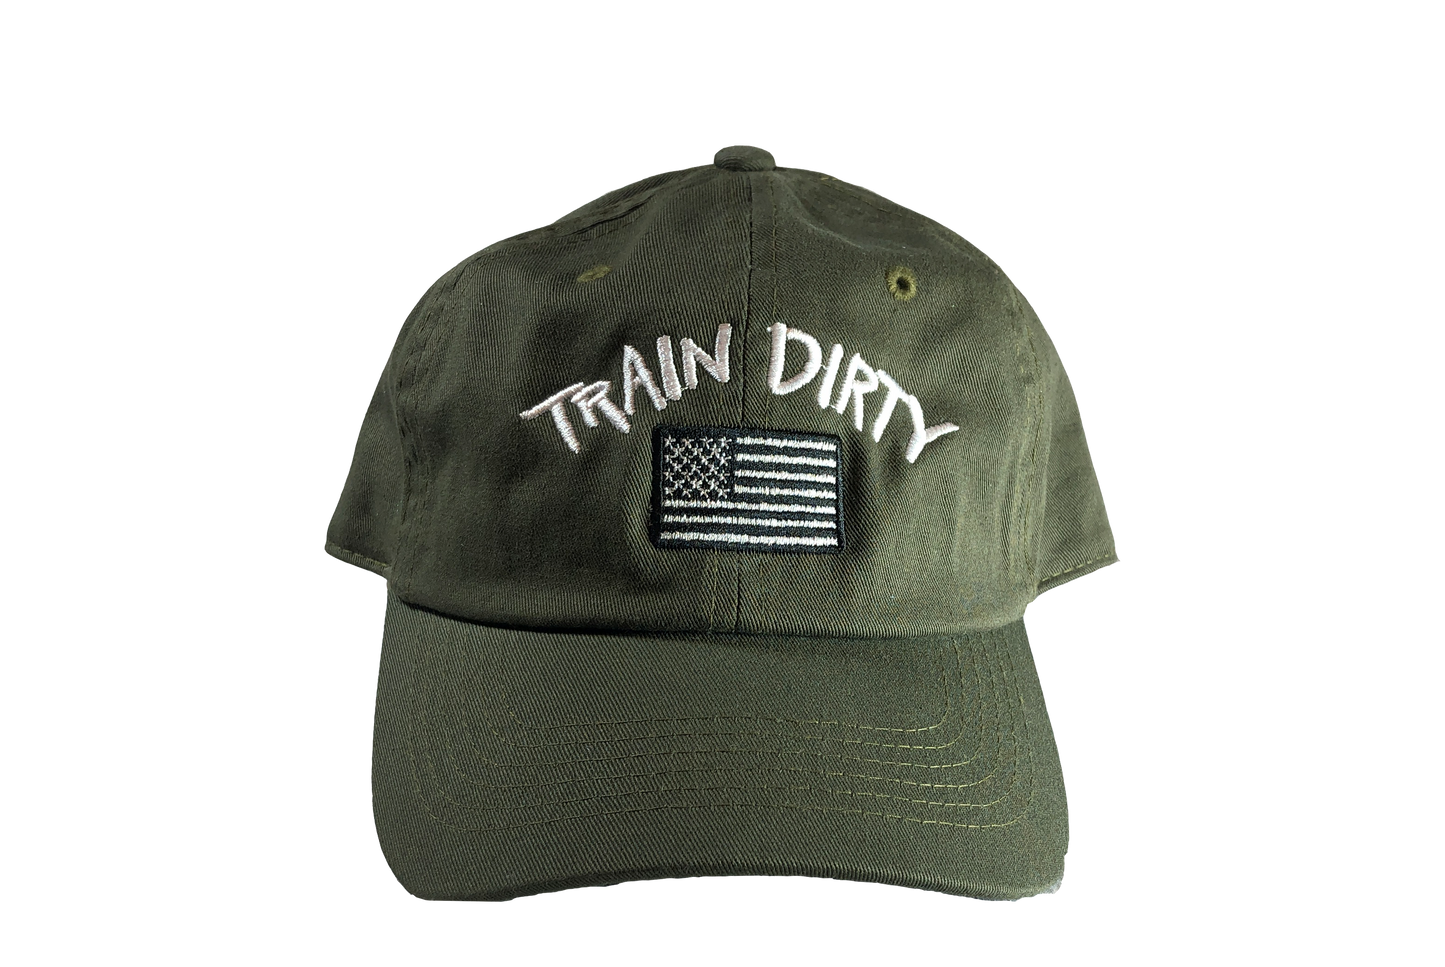 Train Dirty "Valor" strapback training cap